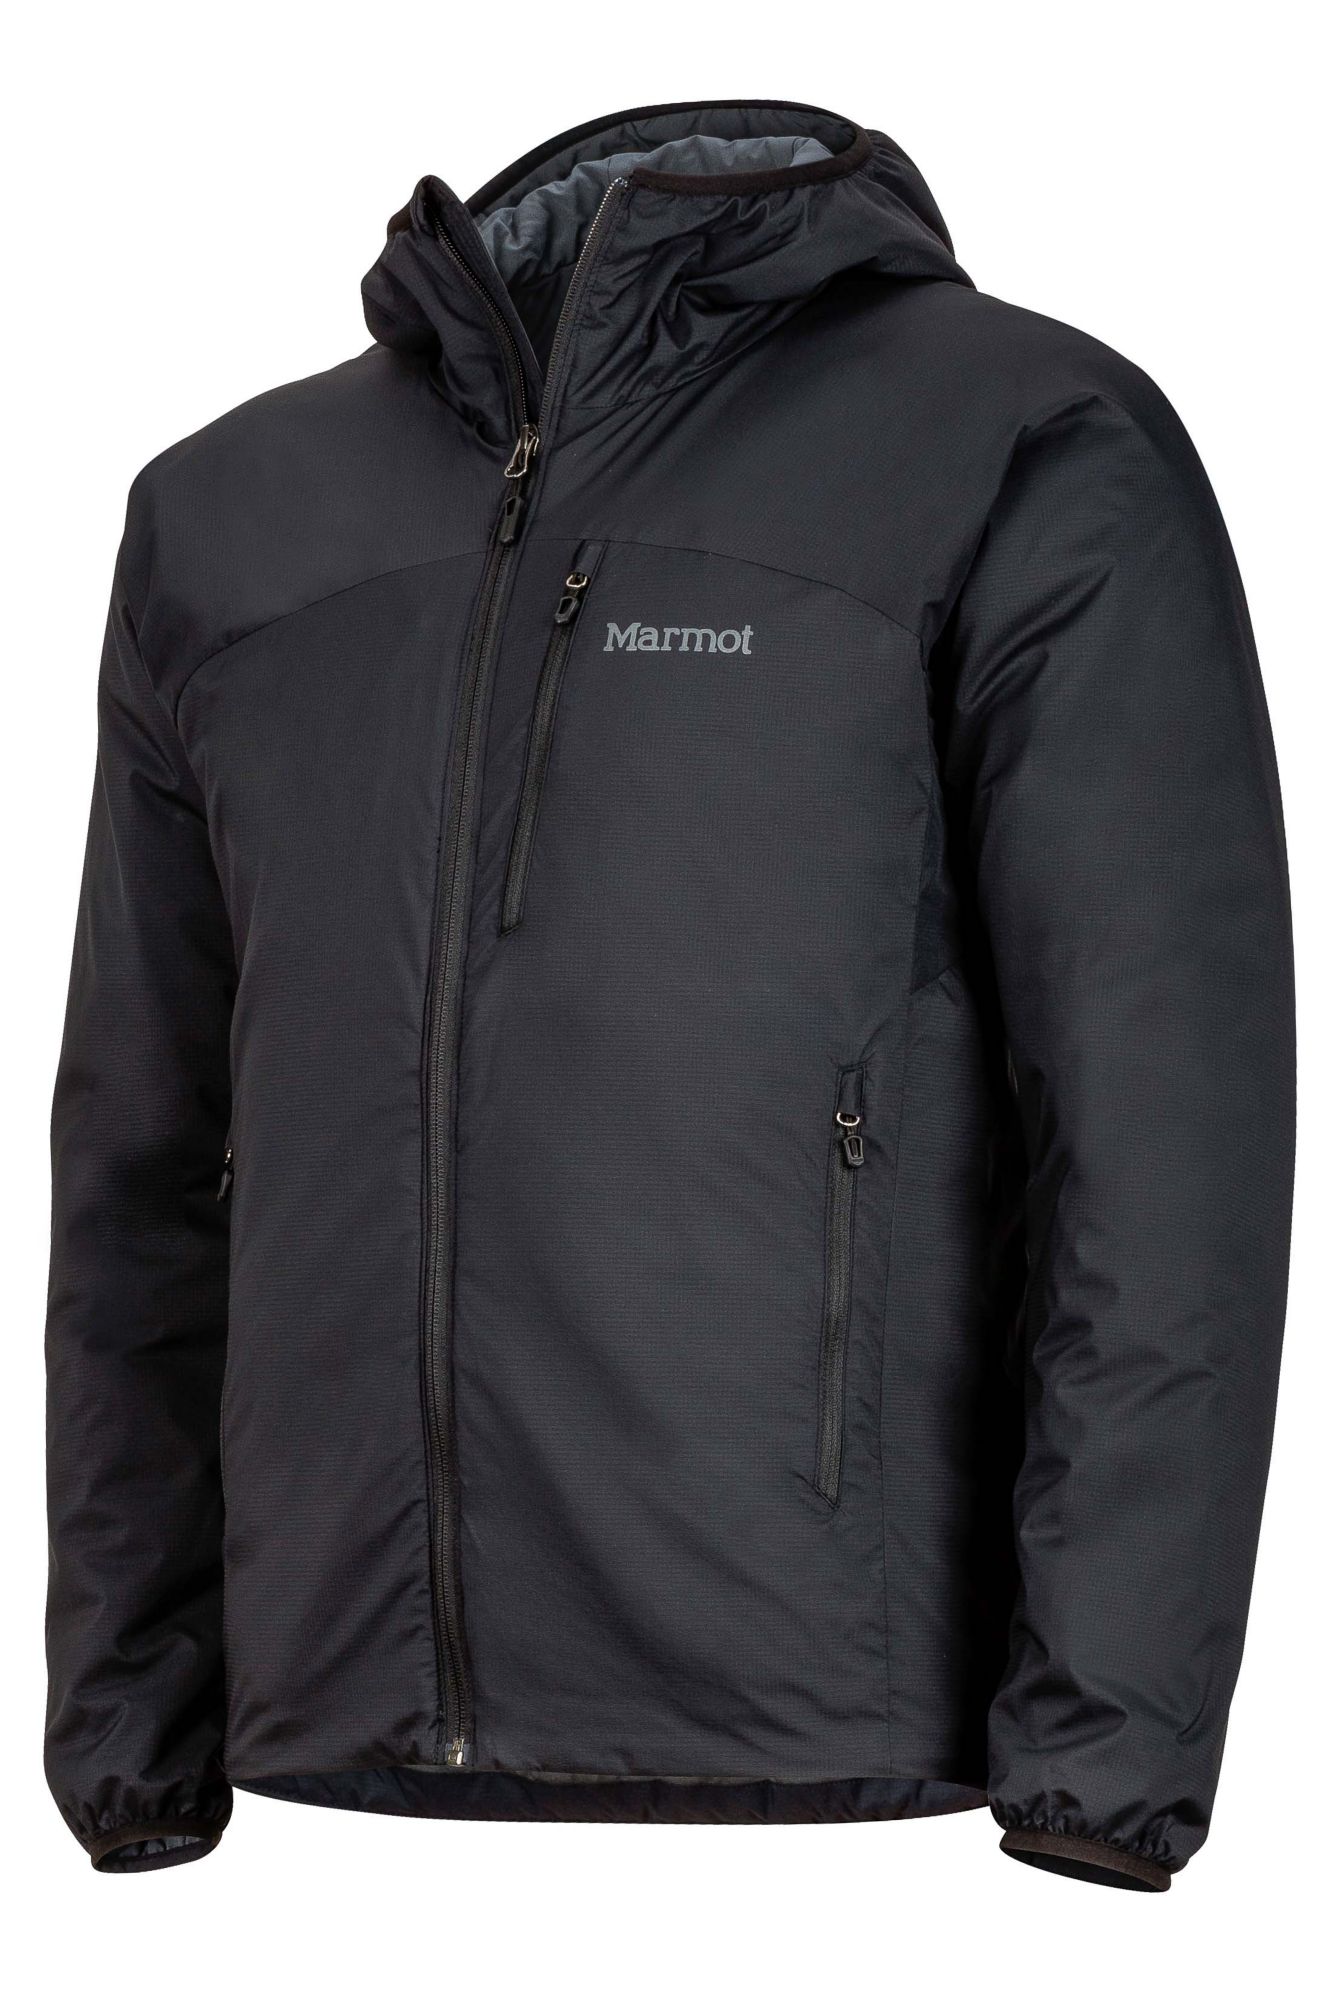 marmot novus hoodie insulated jacket